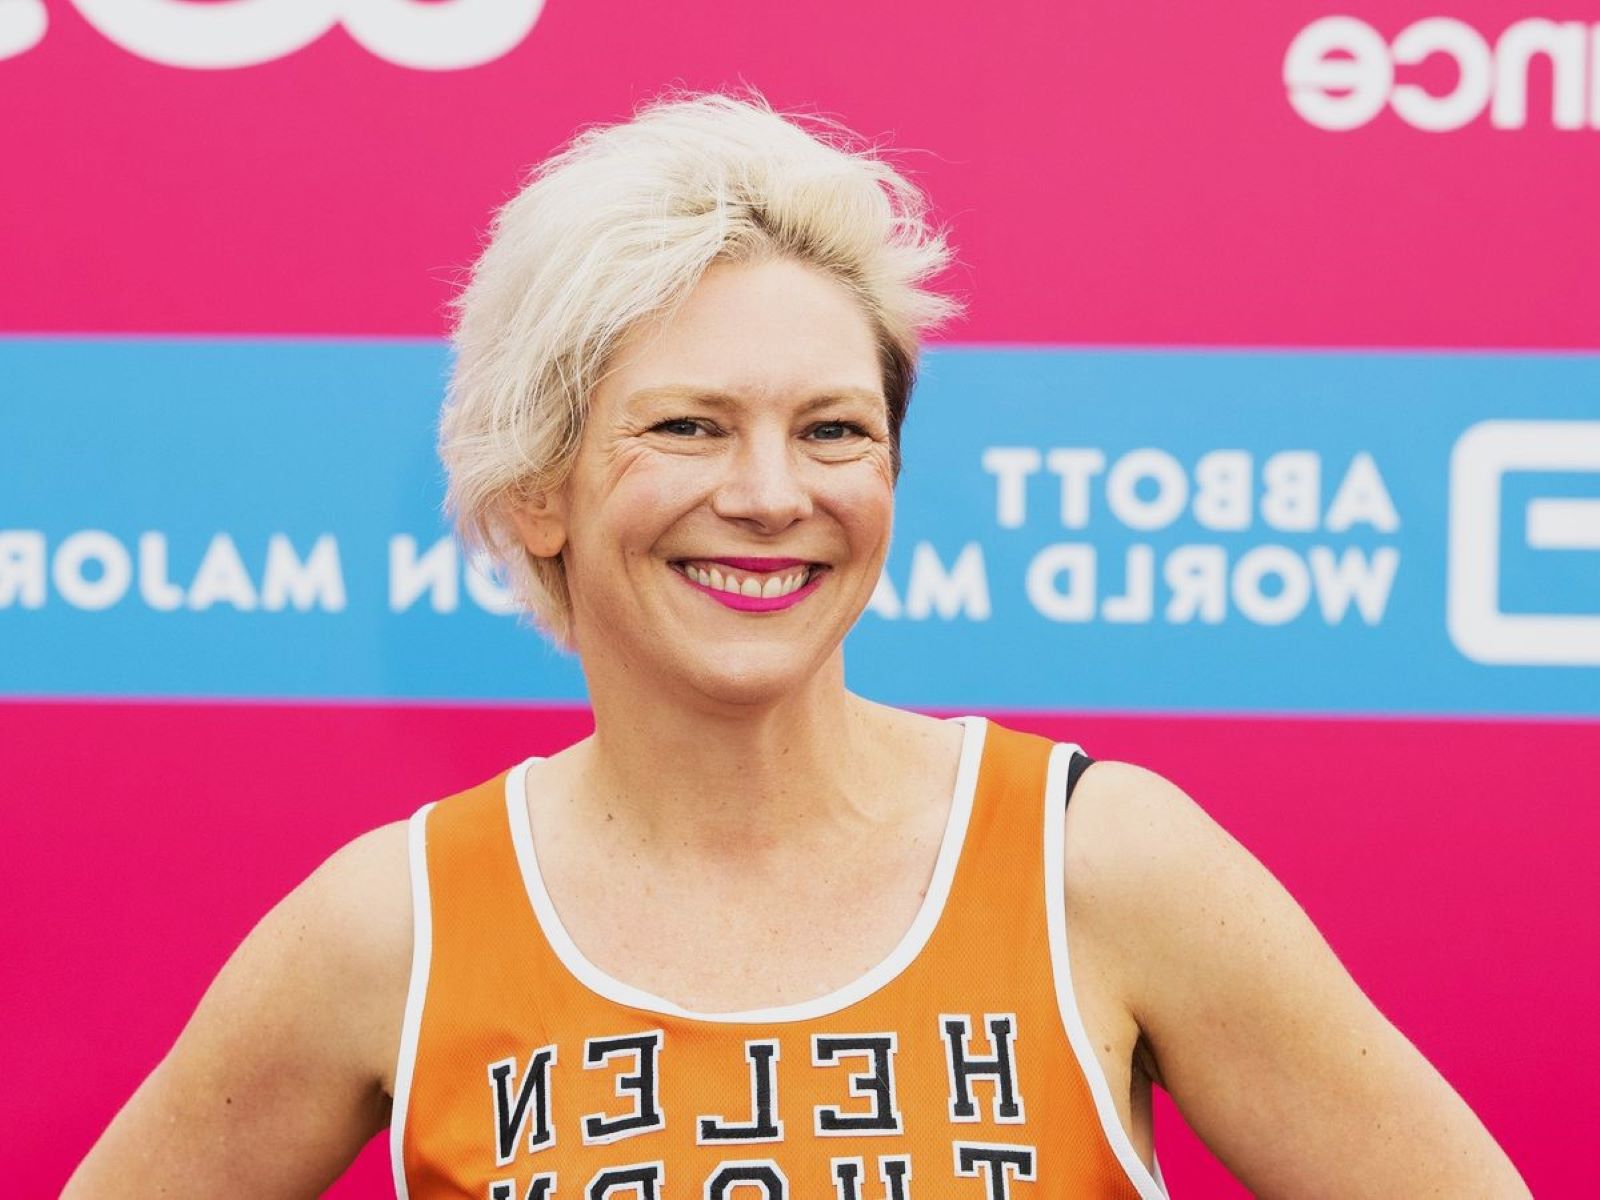 Helen Thorn Sets New Marathon Goal: Aiming For 3:45